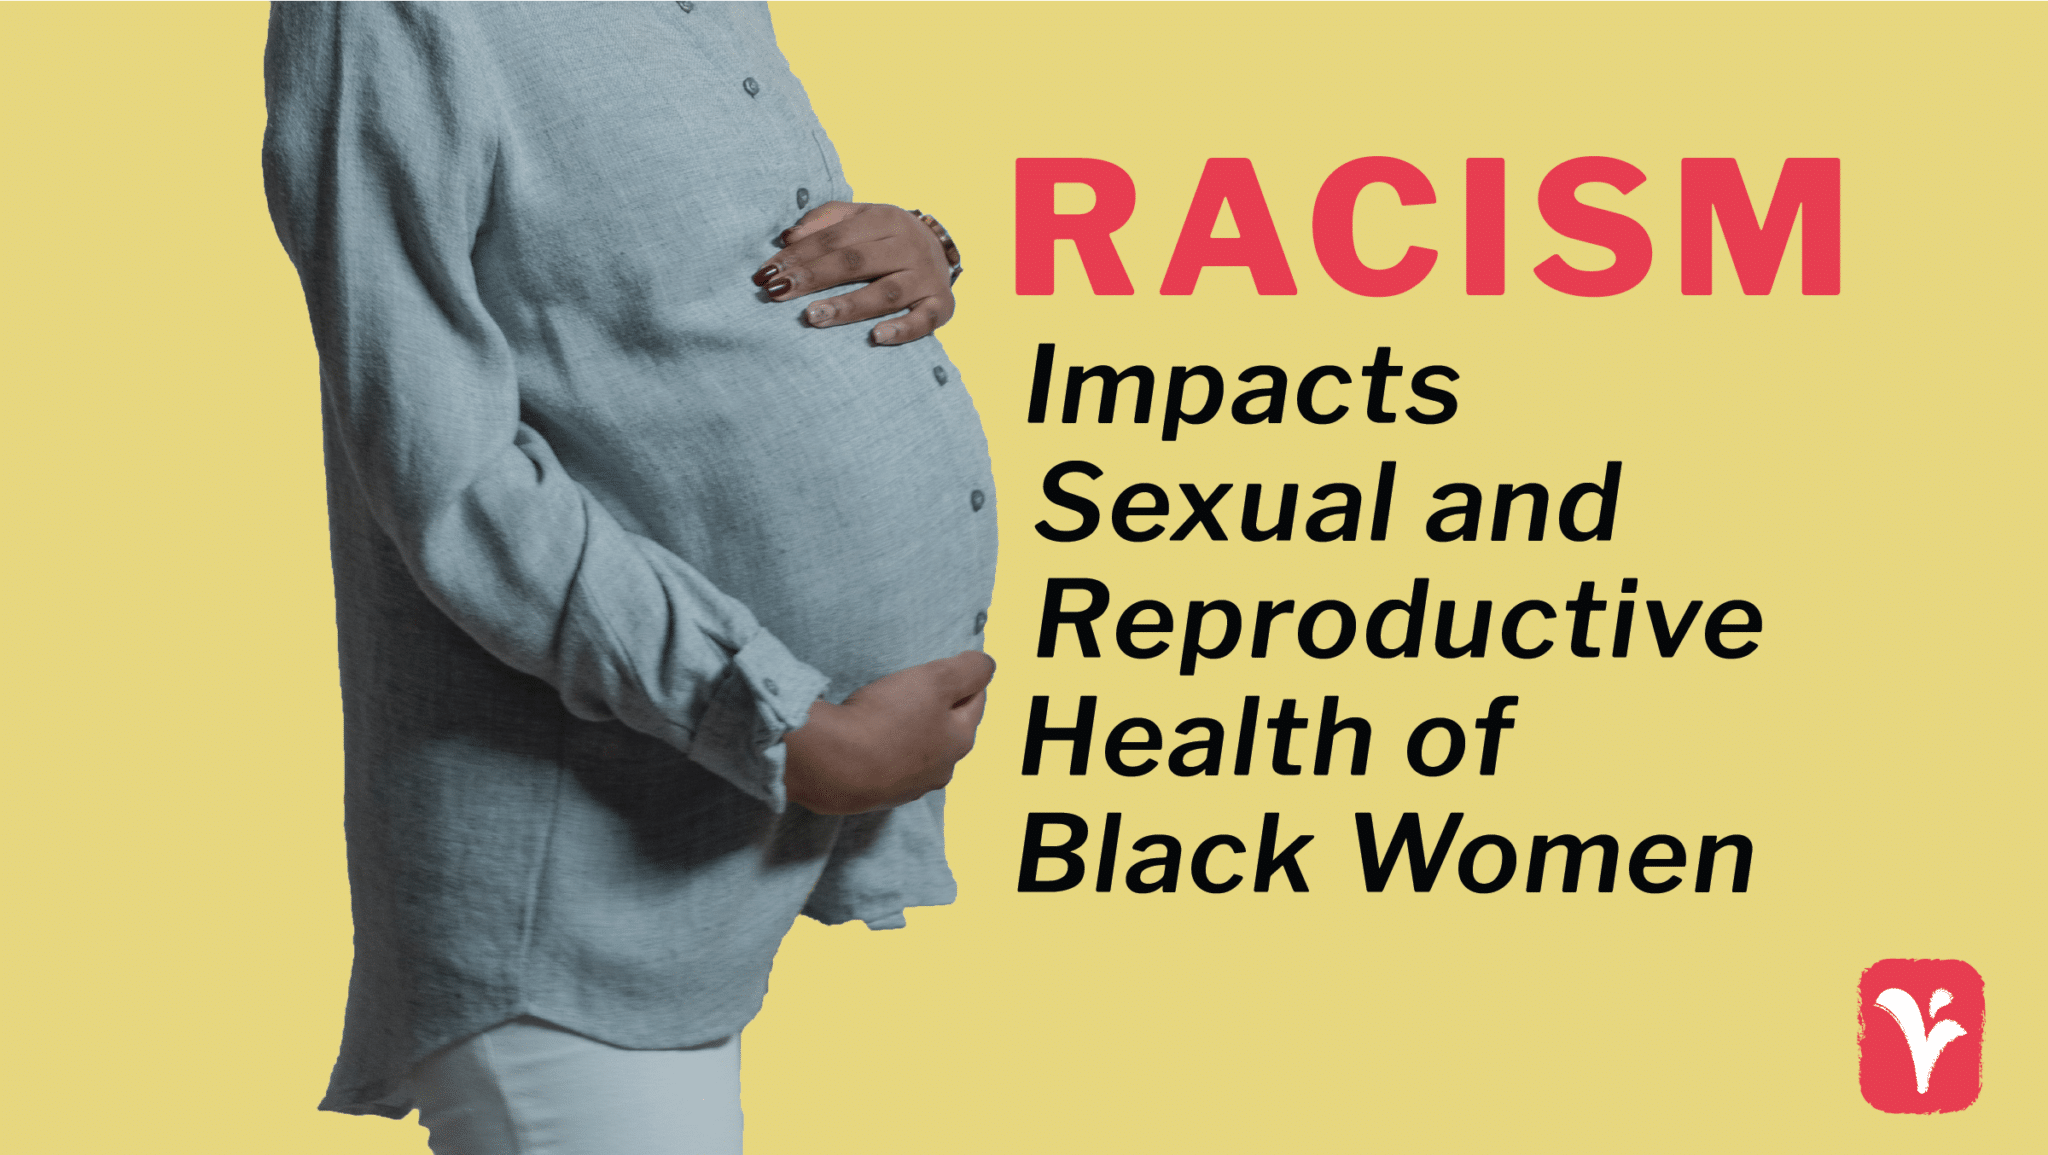 Racism Impacts Black Women